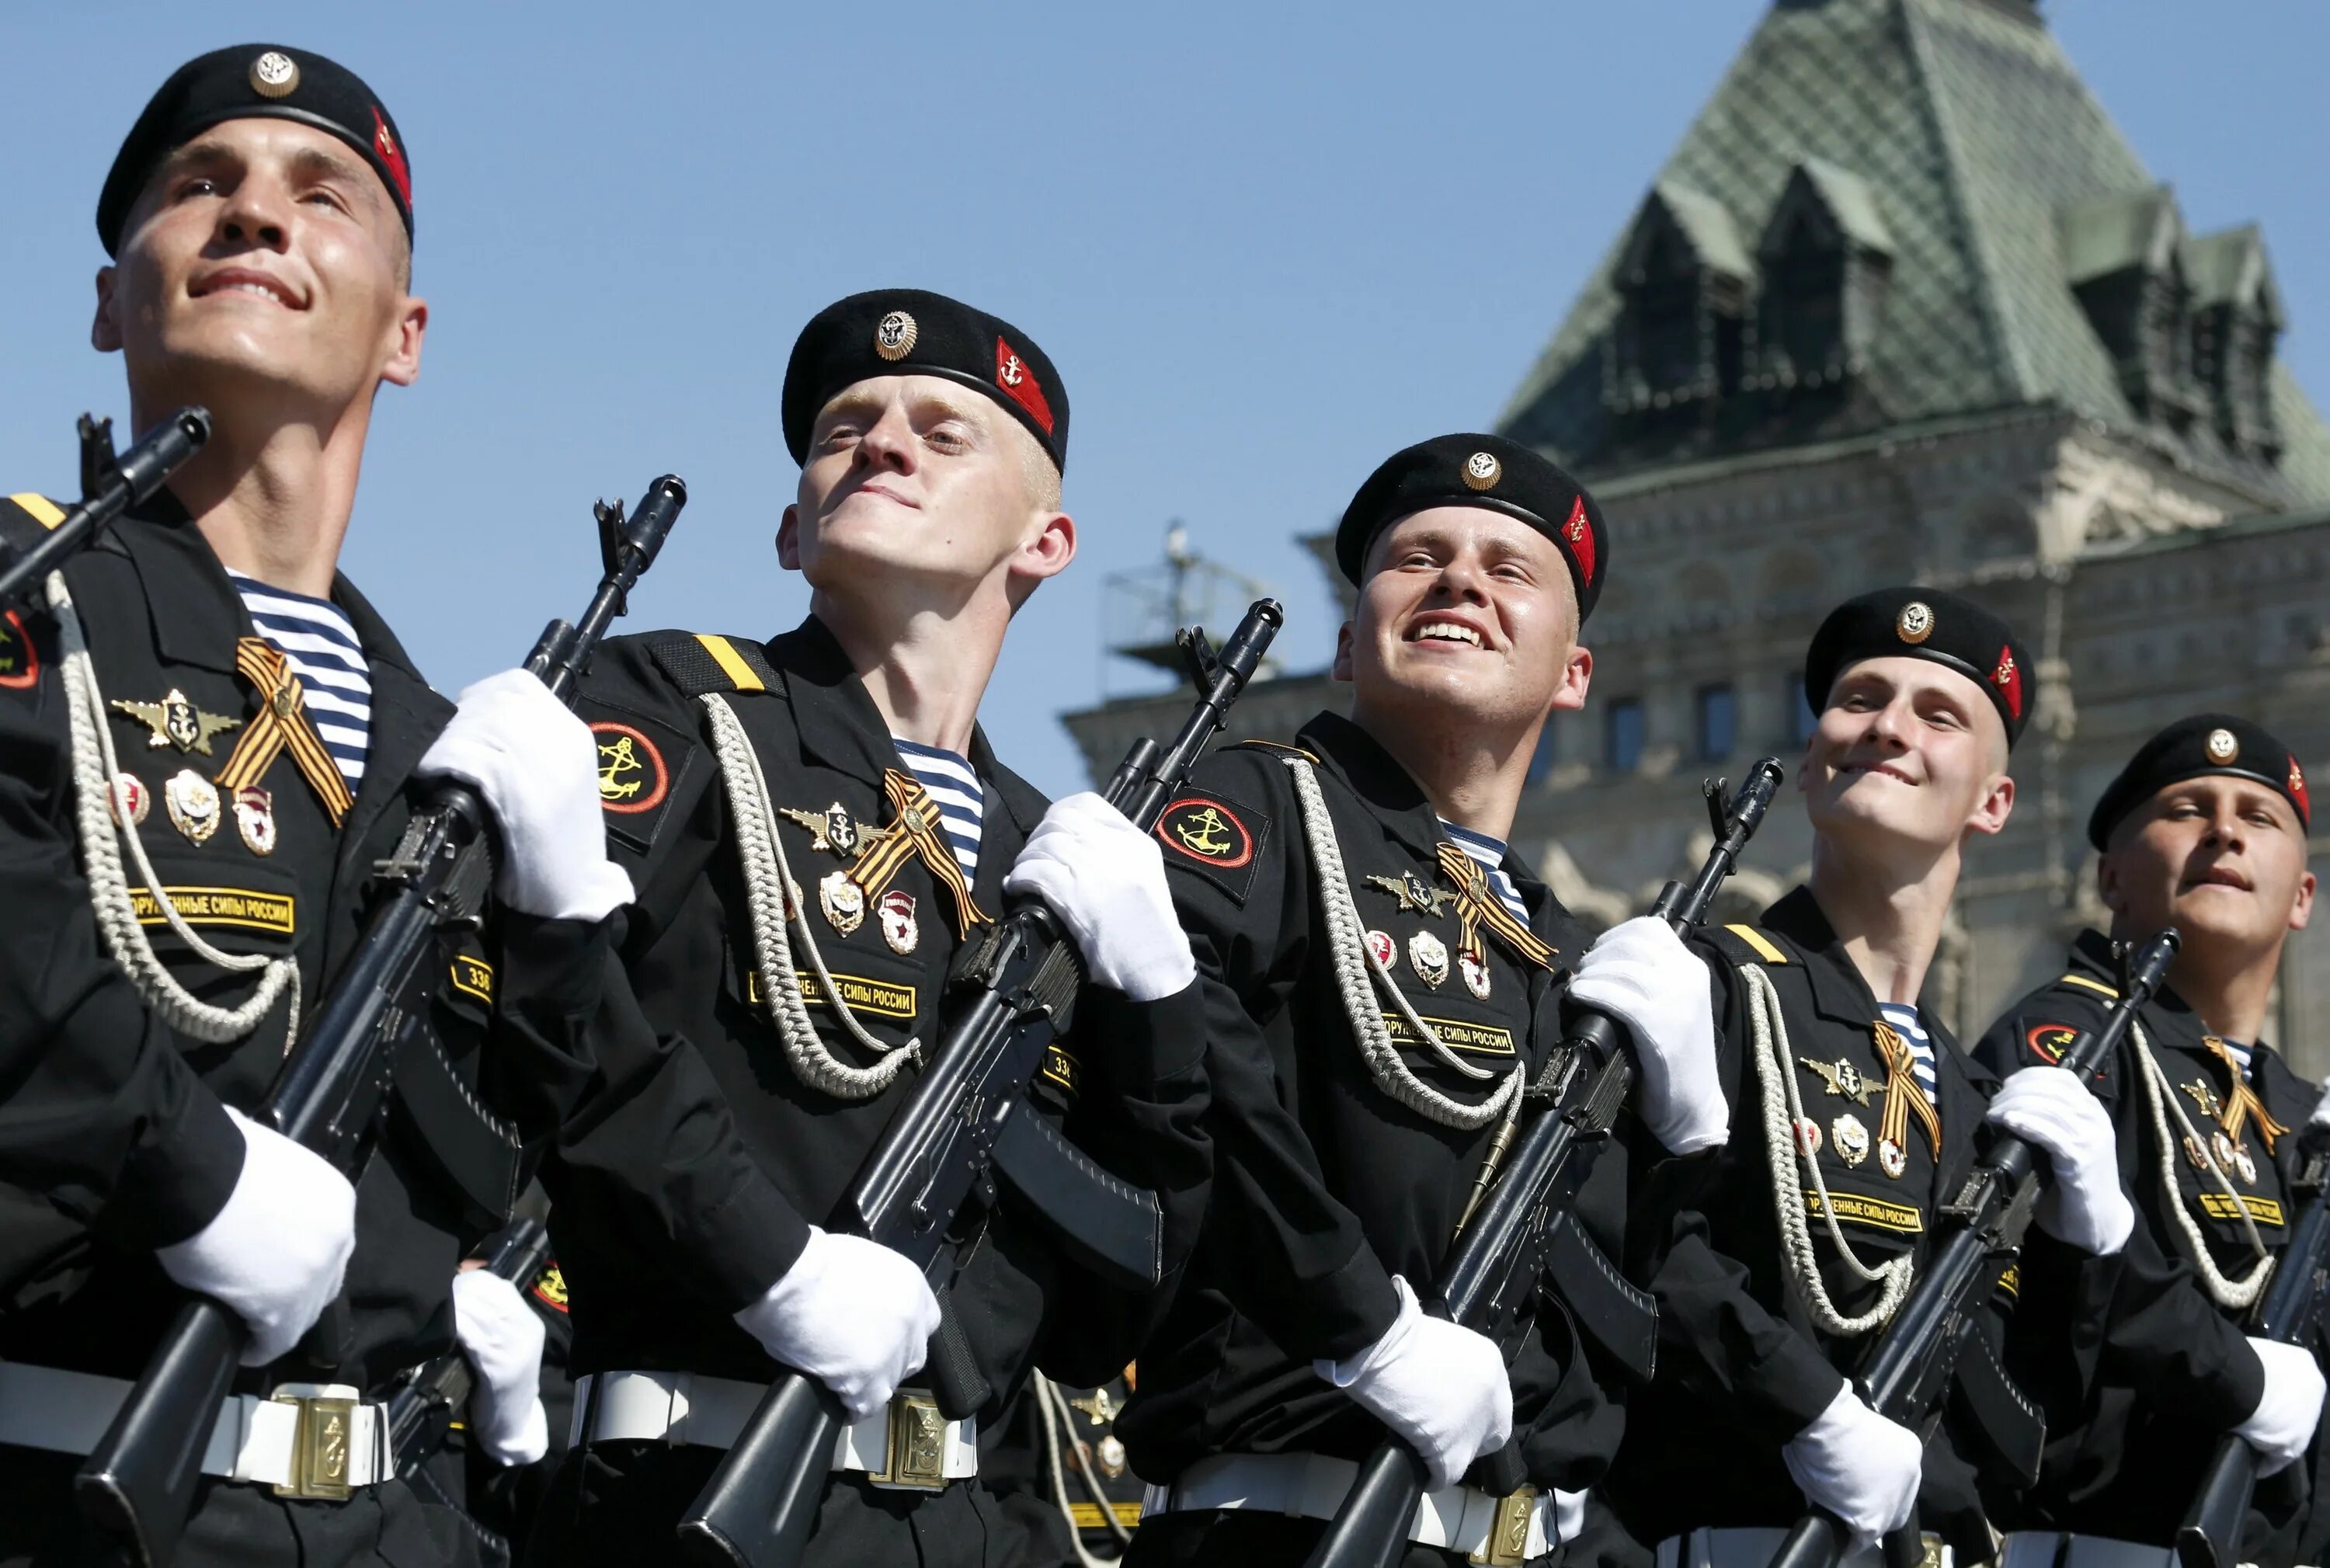 Ютуб парад. Солдаты на параде. Российский солдат на параде. Солдаты на параде Победы. Российские солдаты на параде Победы.